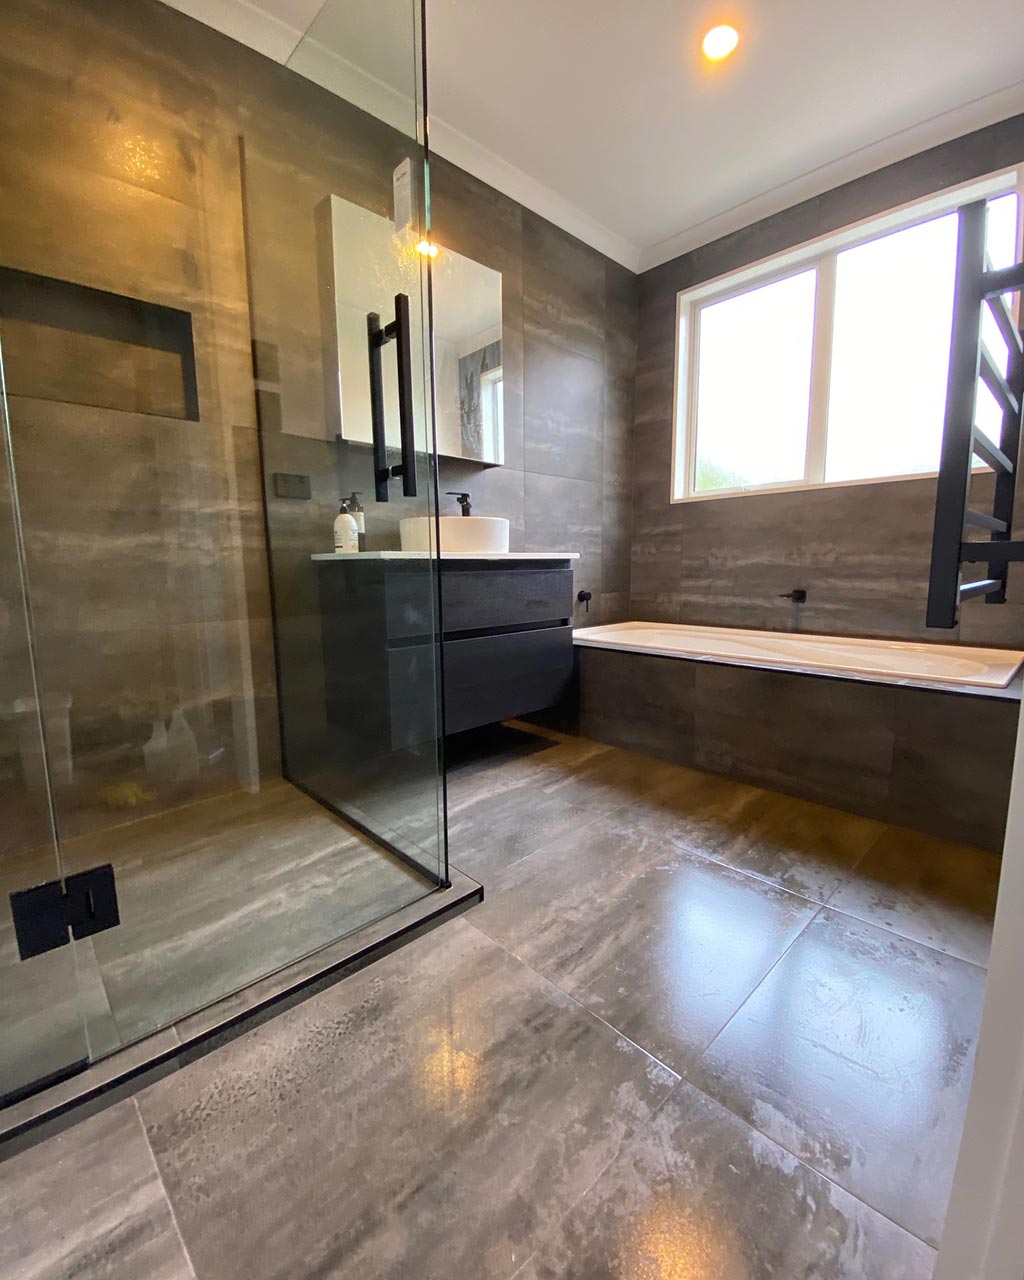 Project Wetroom Christchurch Tiled Bathroom Floors